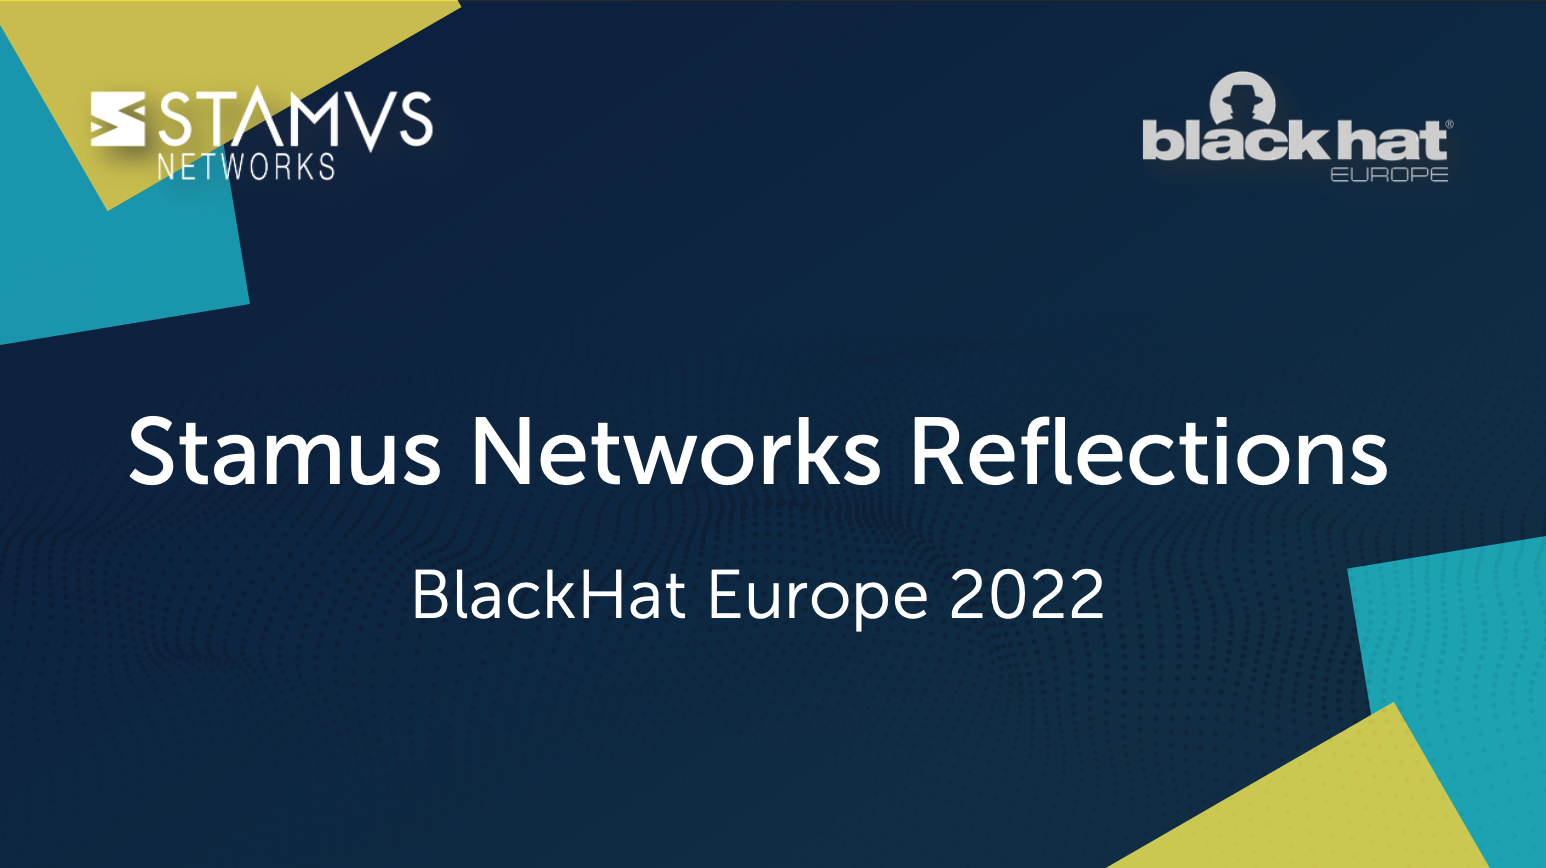 Stamus Networks Reflections on BlackHat Europe 2022